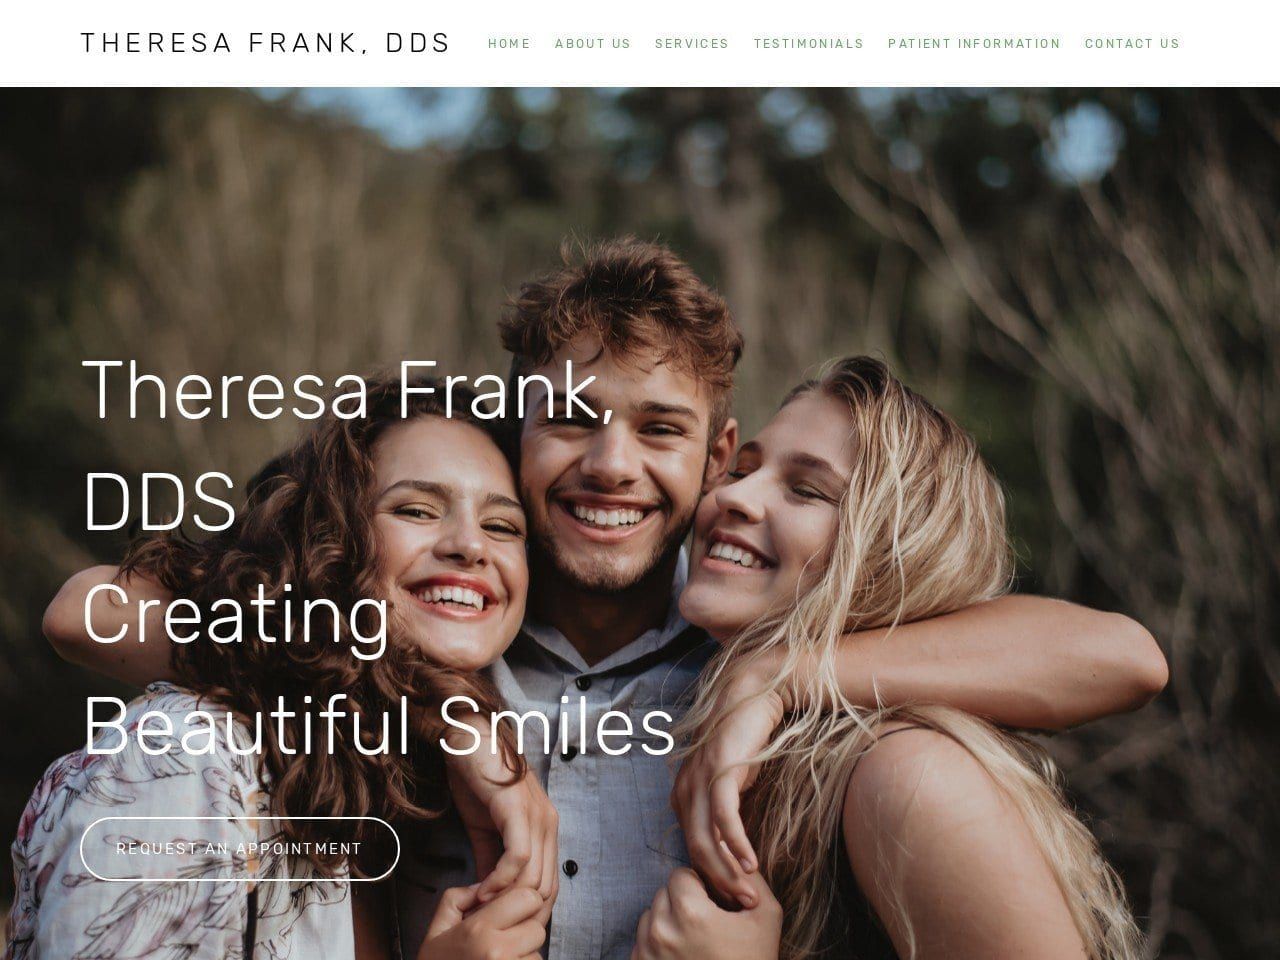 Frank Theresa DDS Website Screenshot from sunnyvalesleepdentistry.com